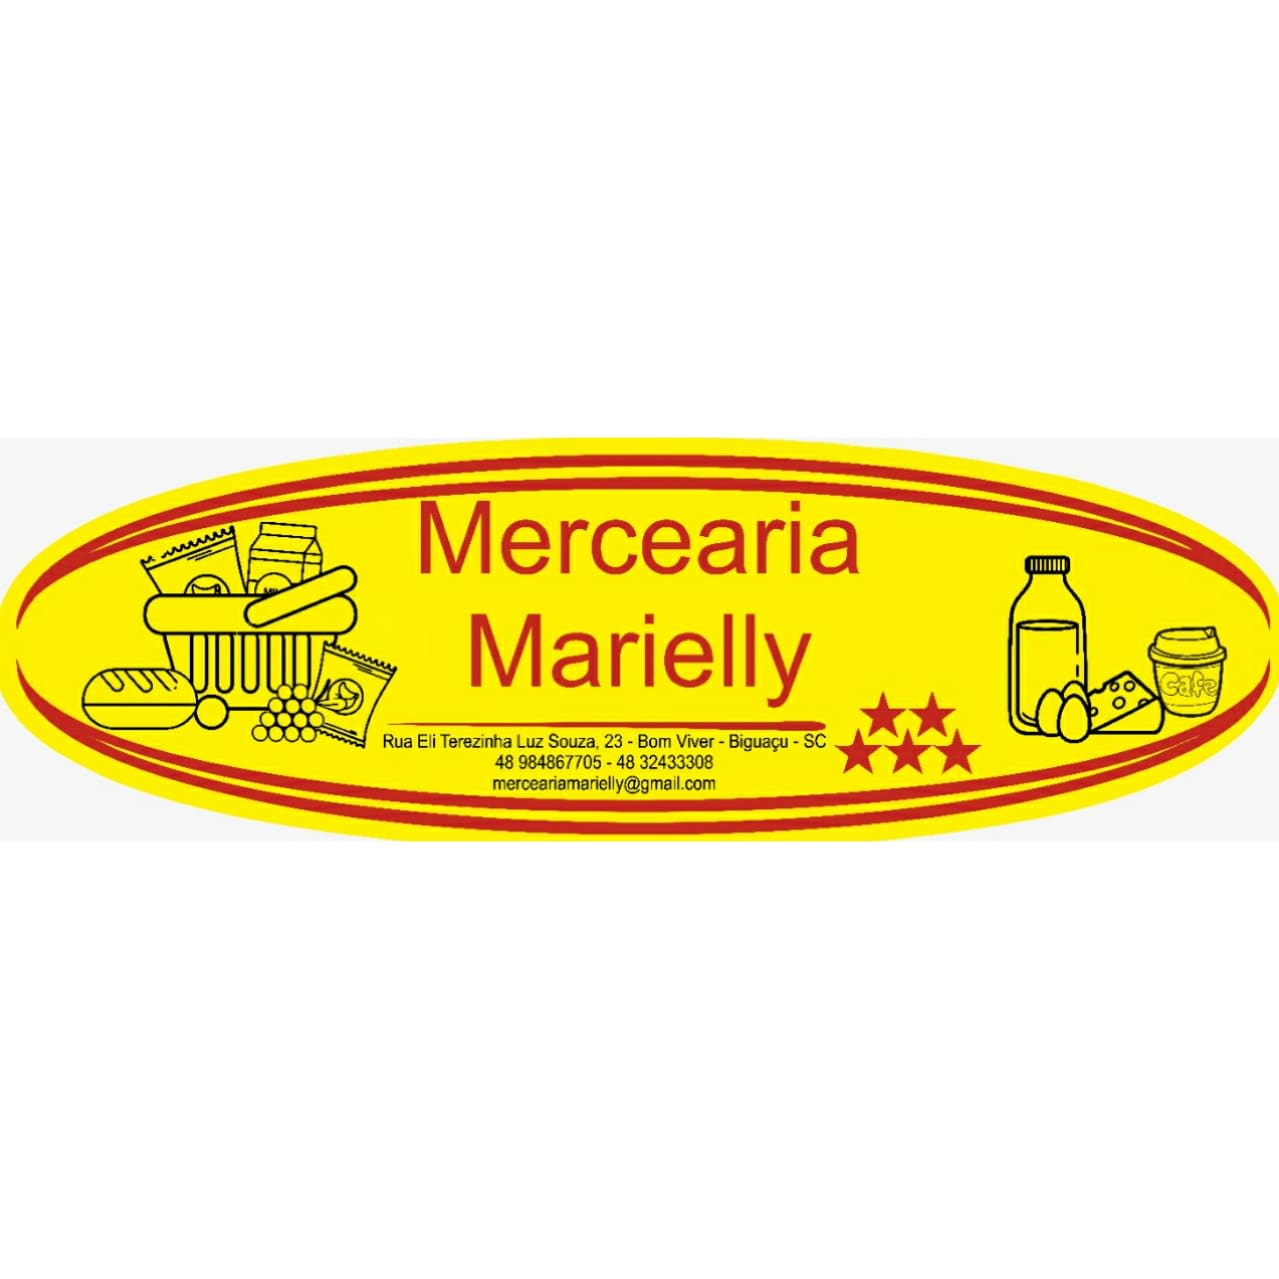 Mercearia Marielly